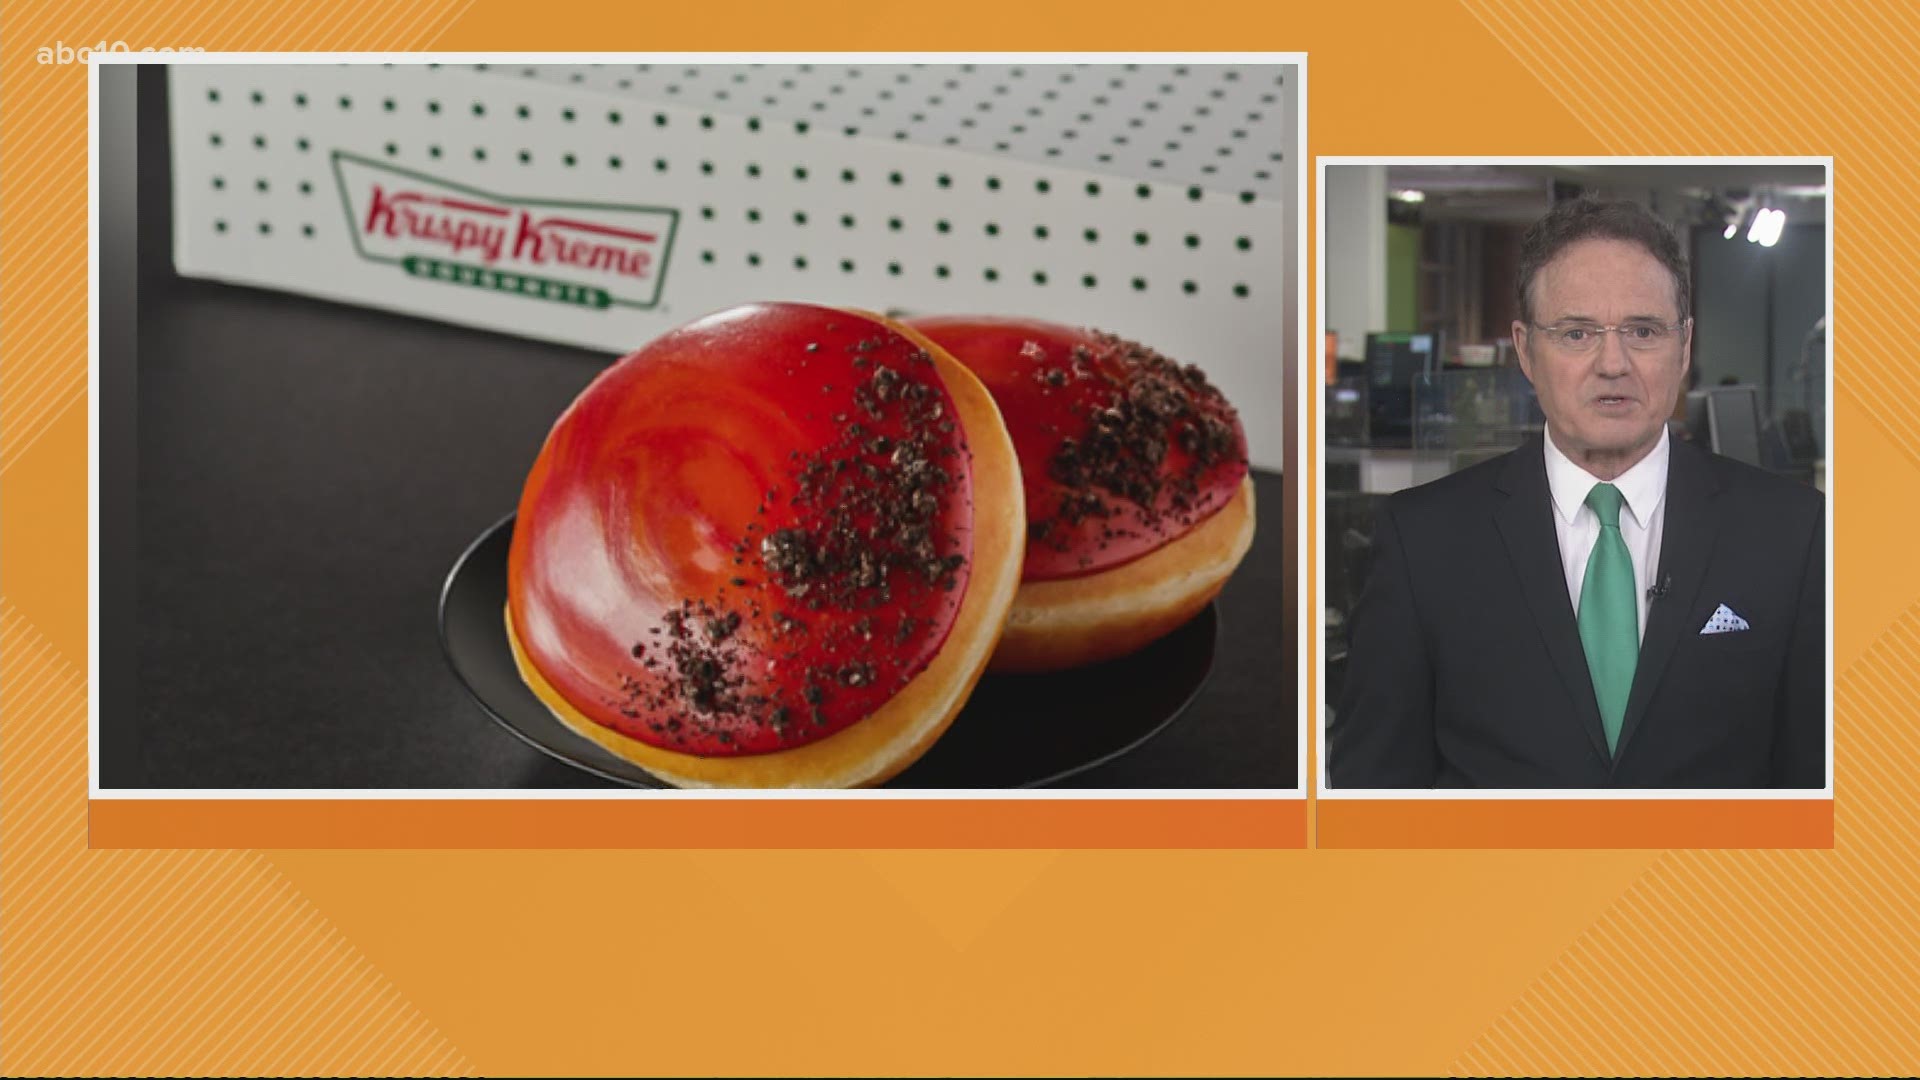 Krispy Kreme launching Mars doughnut | Business Headlines